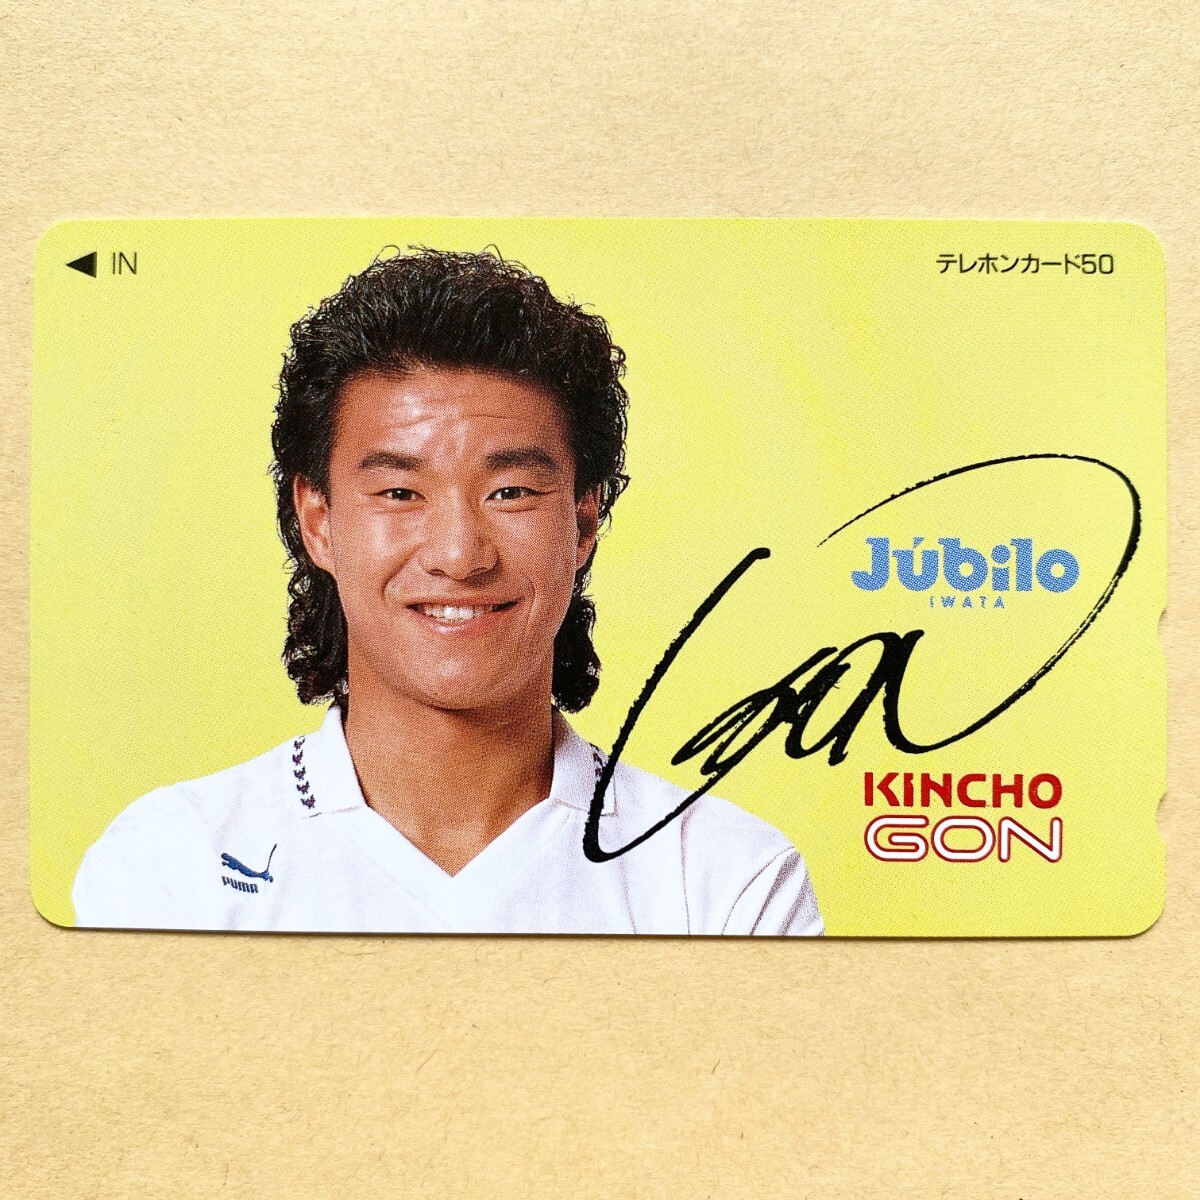 [ не использовался ] футбол телефонная карточка 50 раз Nakayama . история gon Nakayama jubiro Iwata KINCHO GON